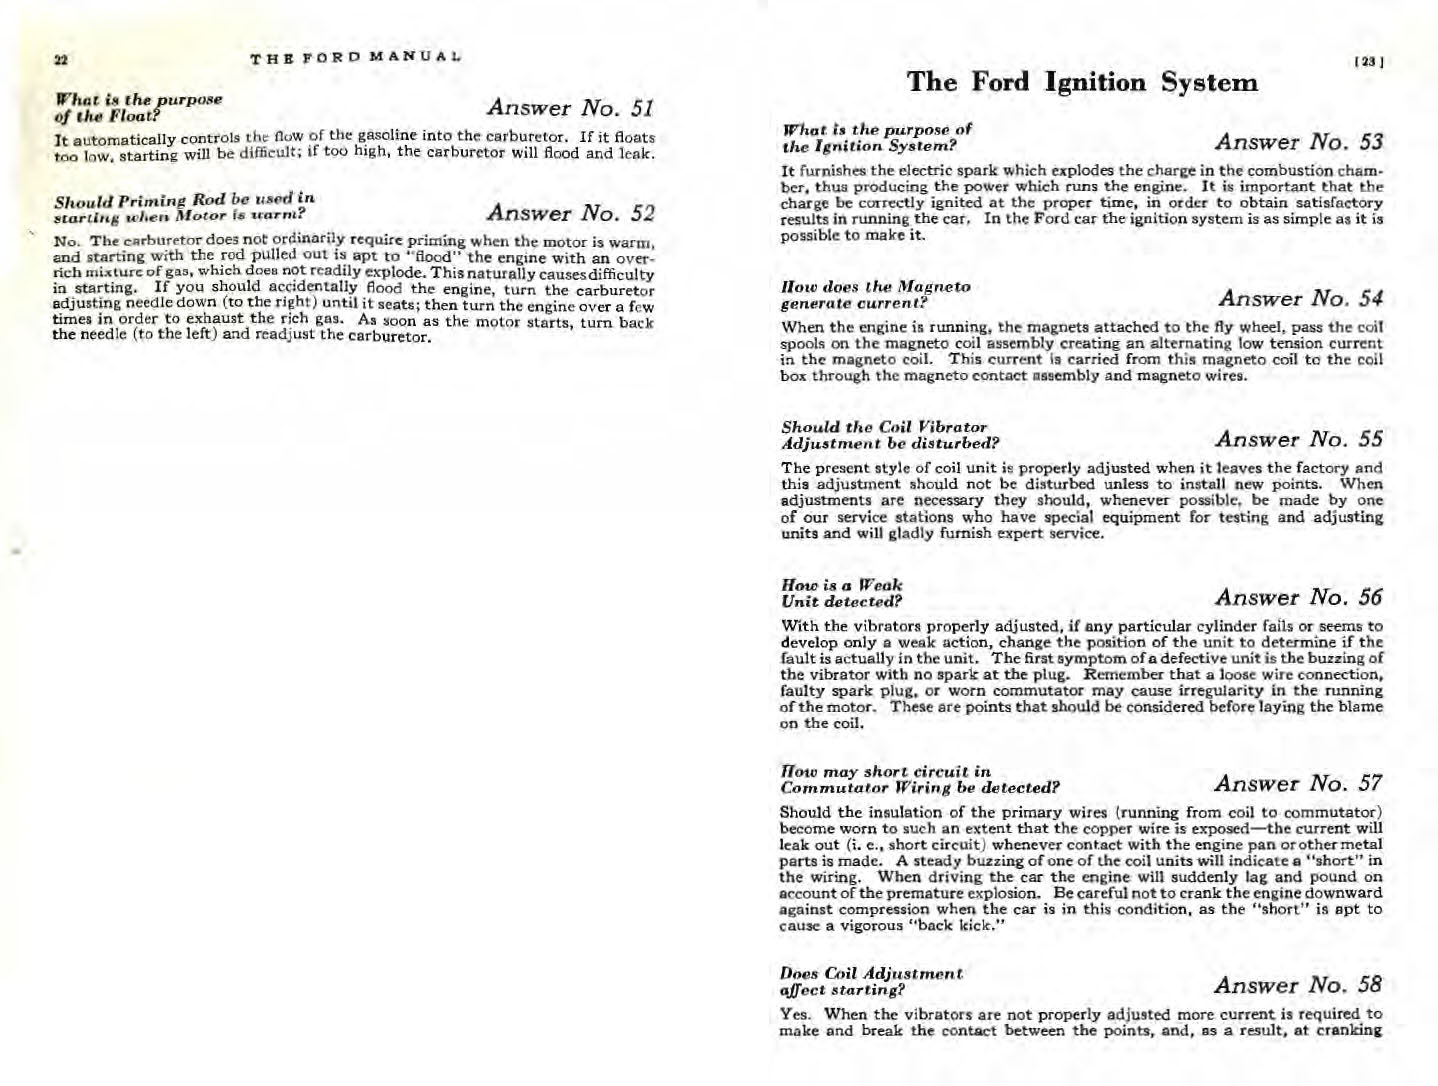 n_1926 Ford Owners Manual-22-23.jpg